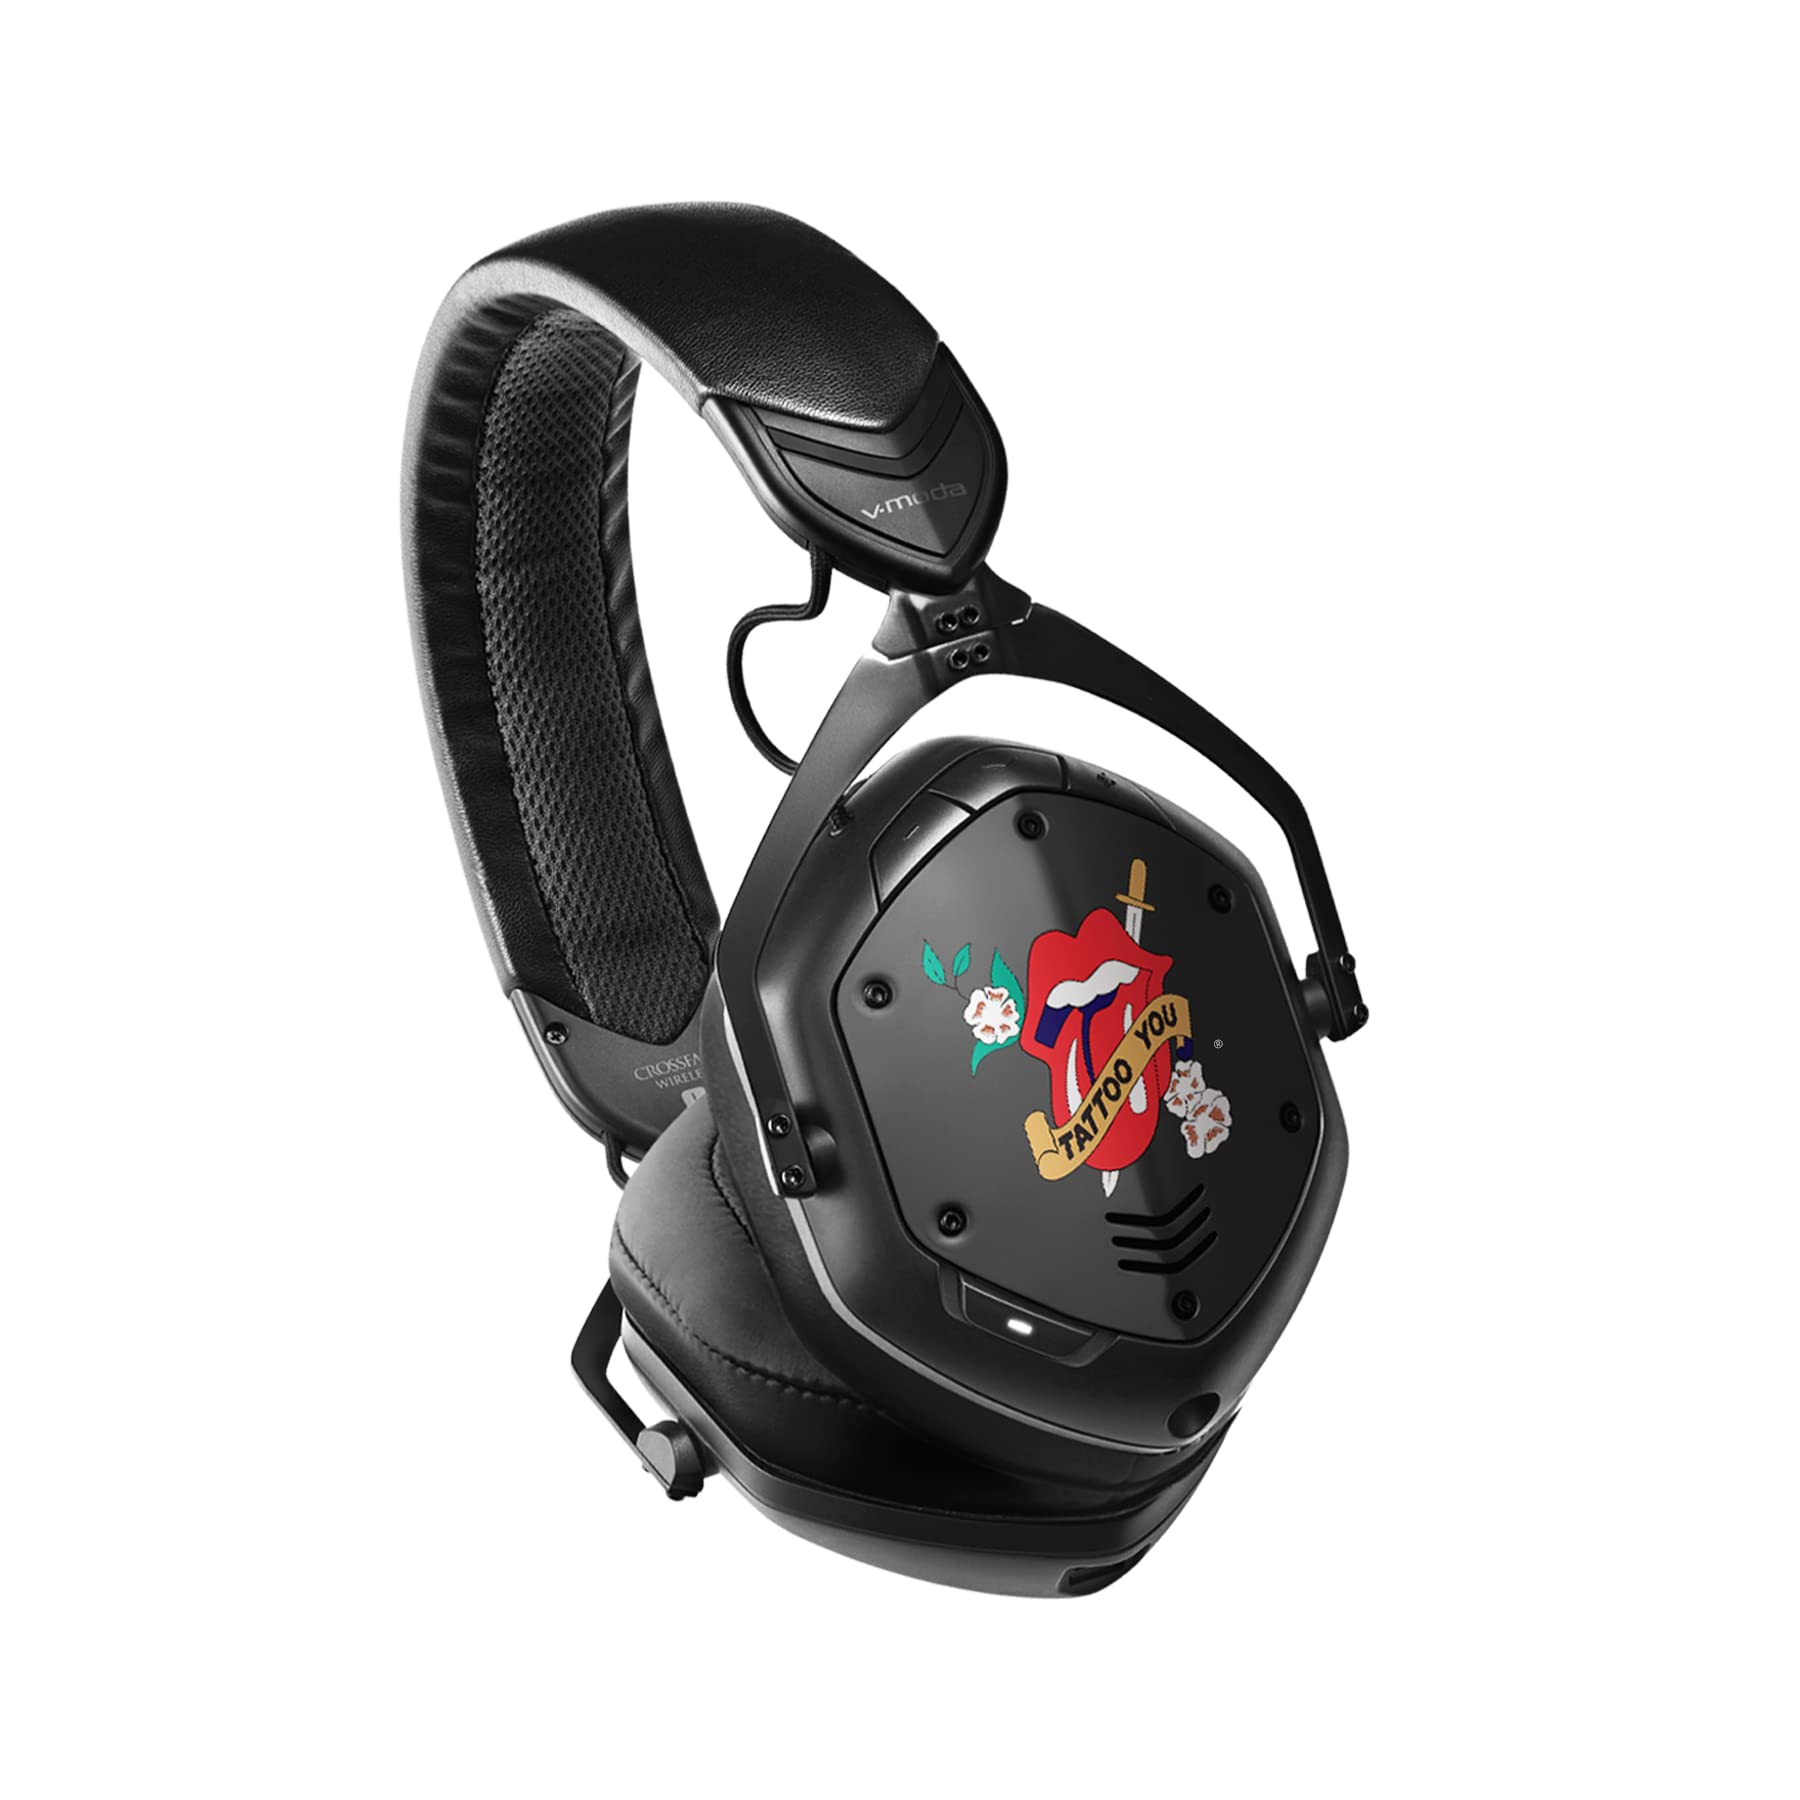 Rolling Stones x V-MODA Crossfade 2 Wireless Over-Ear Headphone in Black, Tattoo (RSTONES-Tattoo)